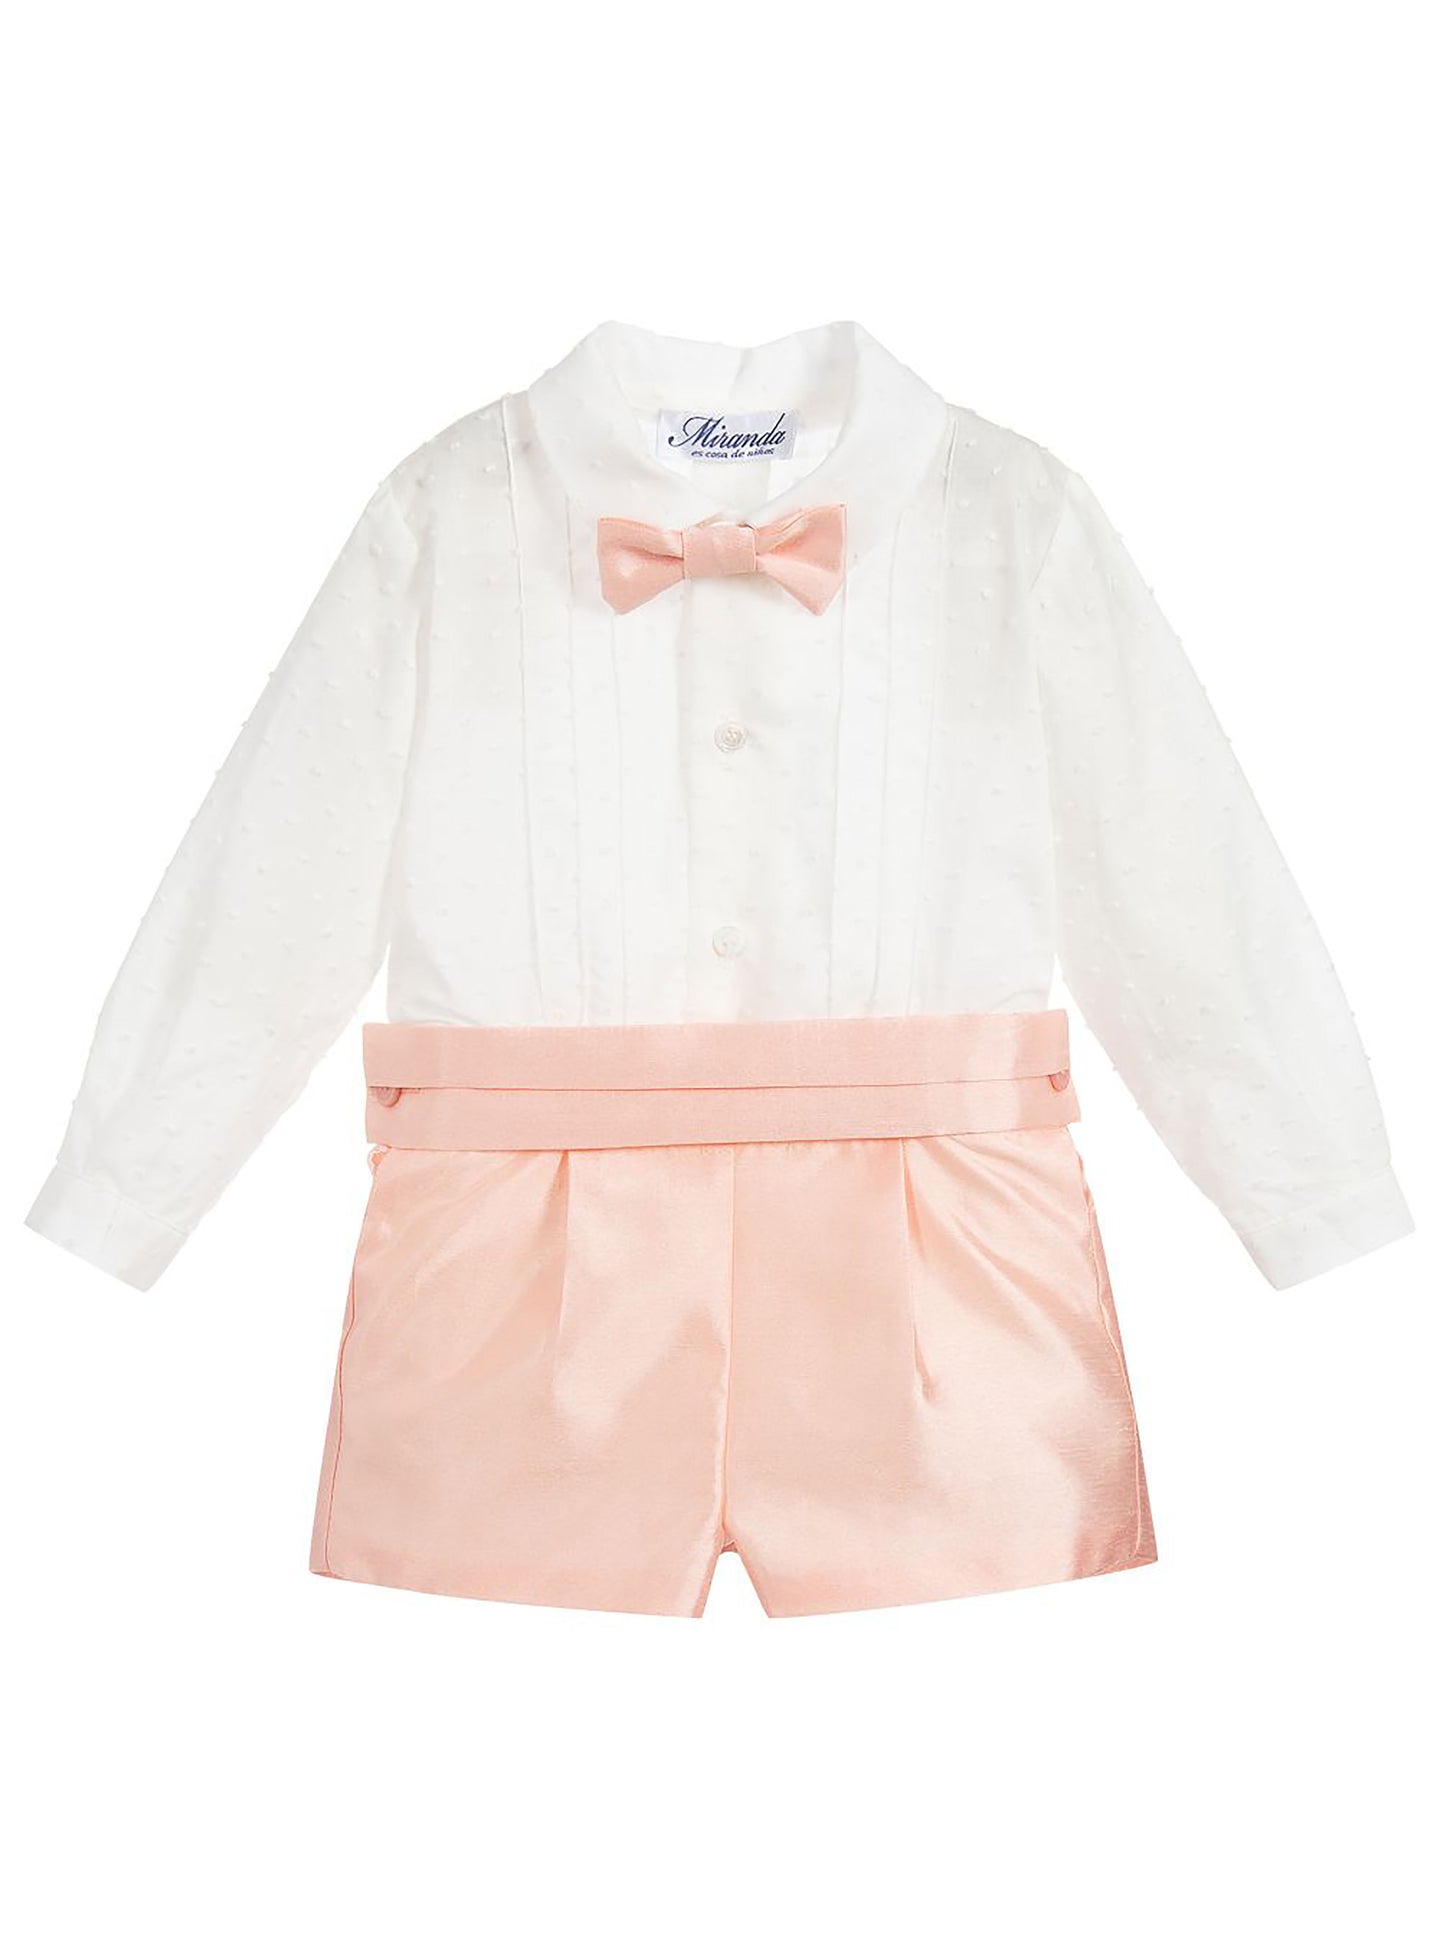 [9-12m] Miranda White Shirt And Pink Shorts Set